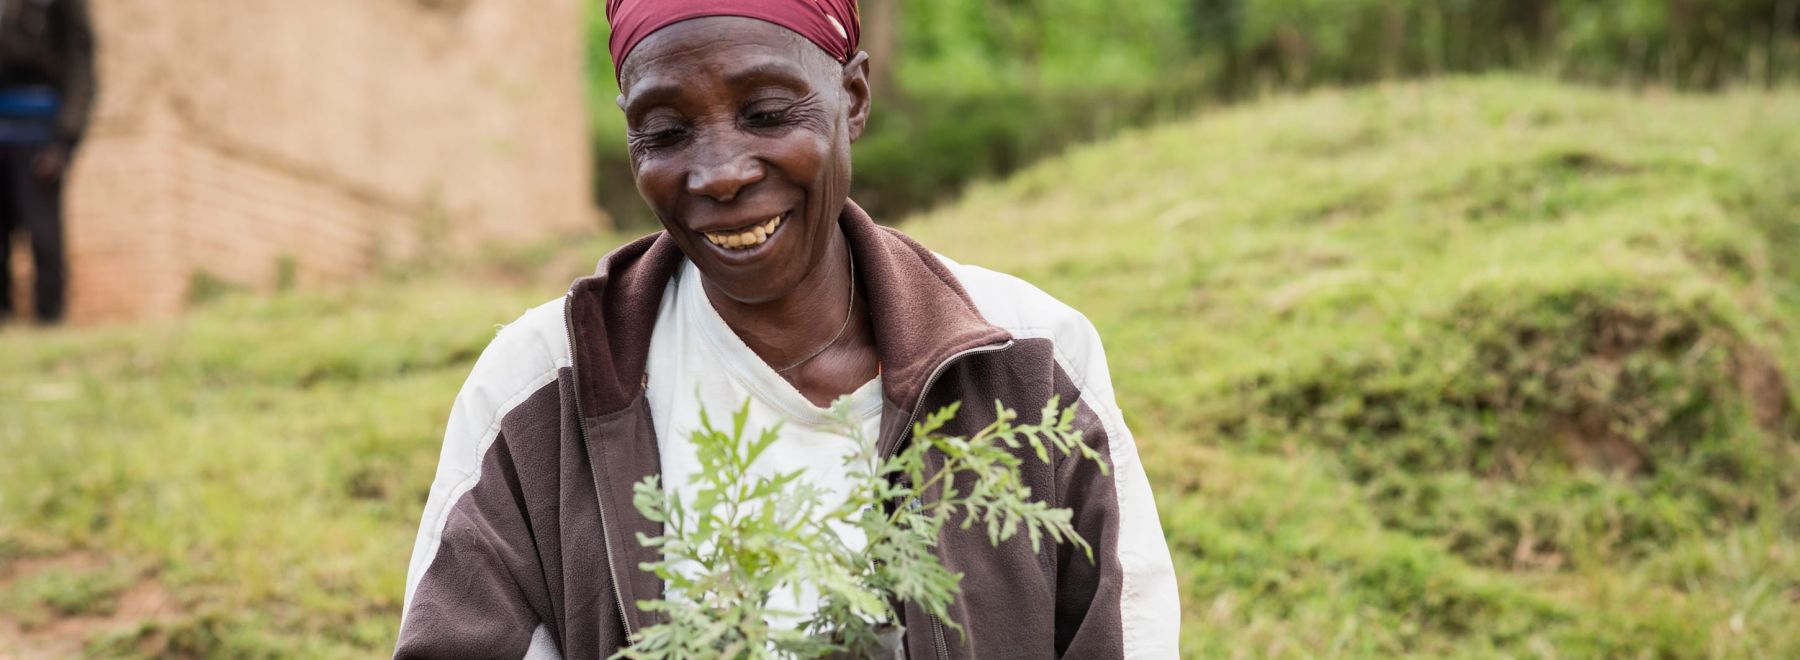 A farmer in Rwanda holding her new tree seedlings 